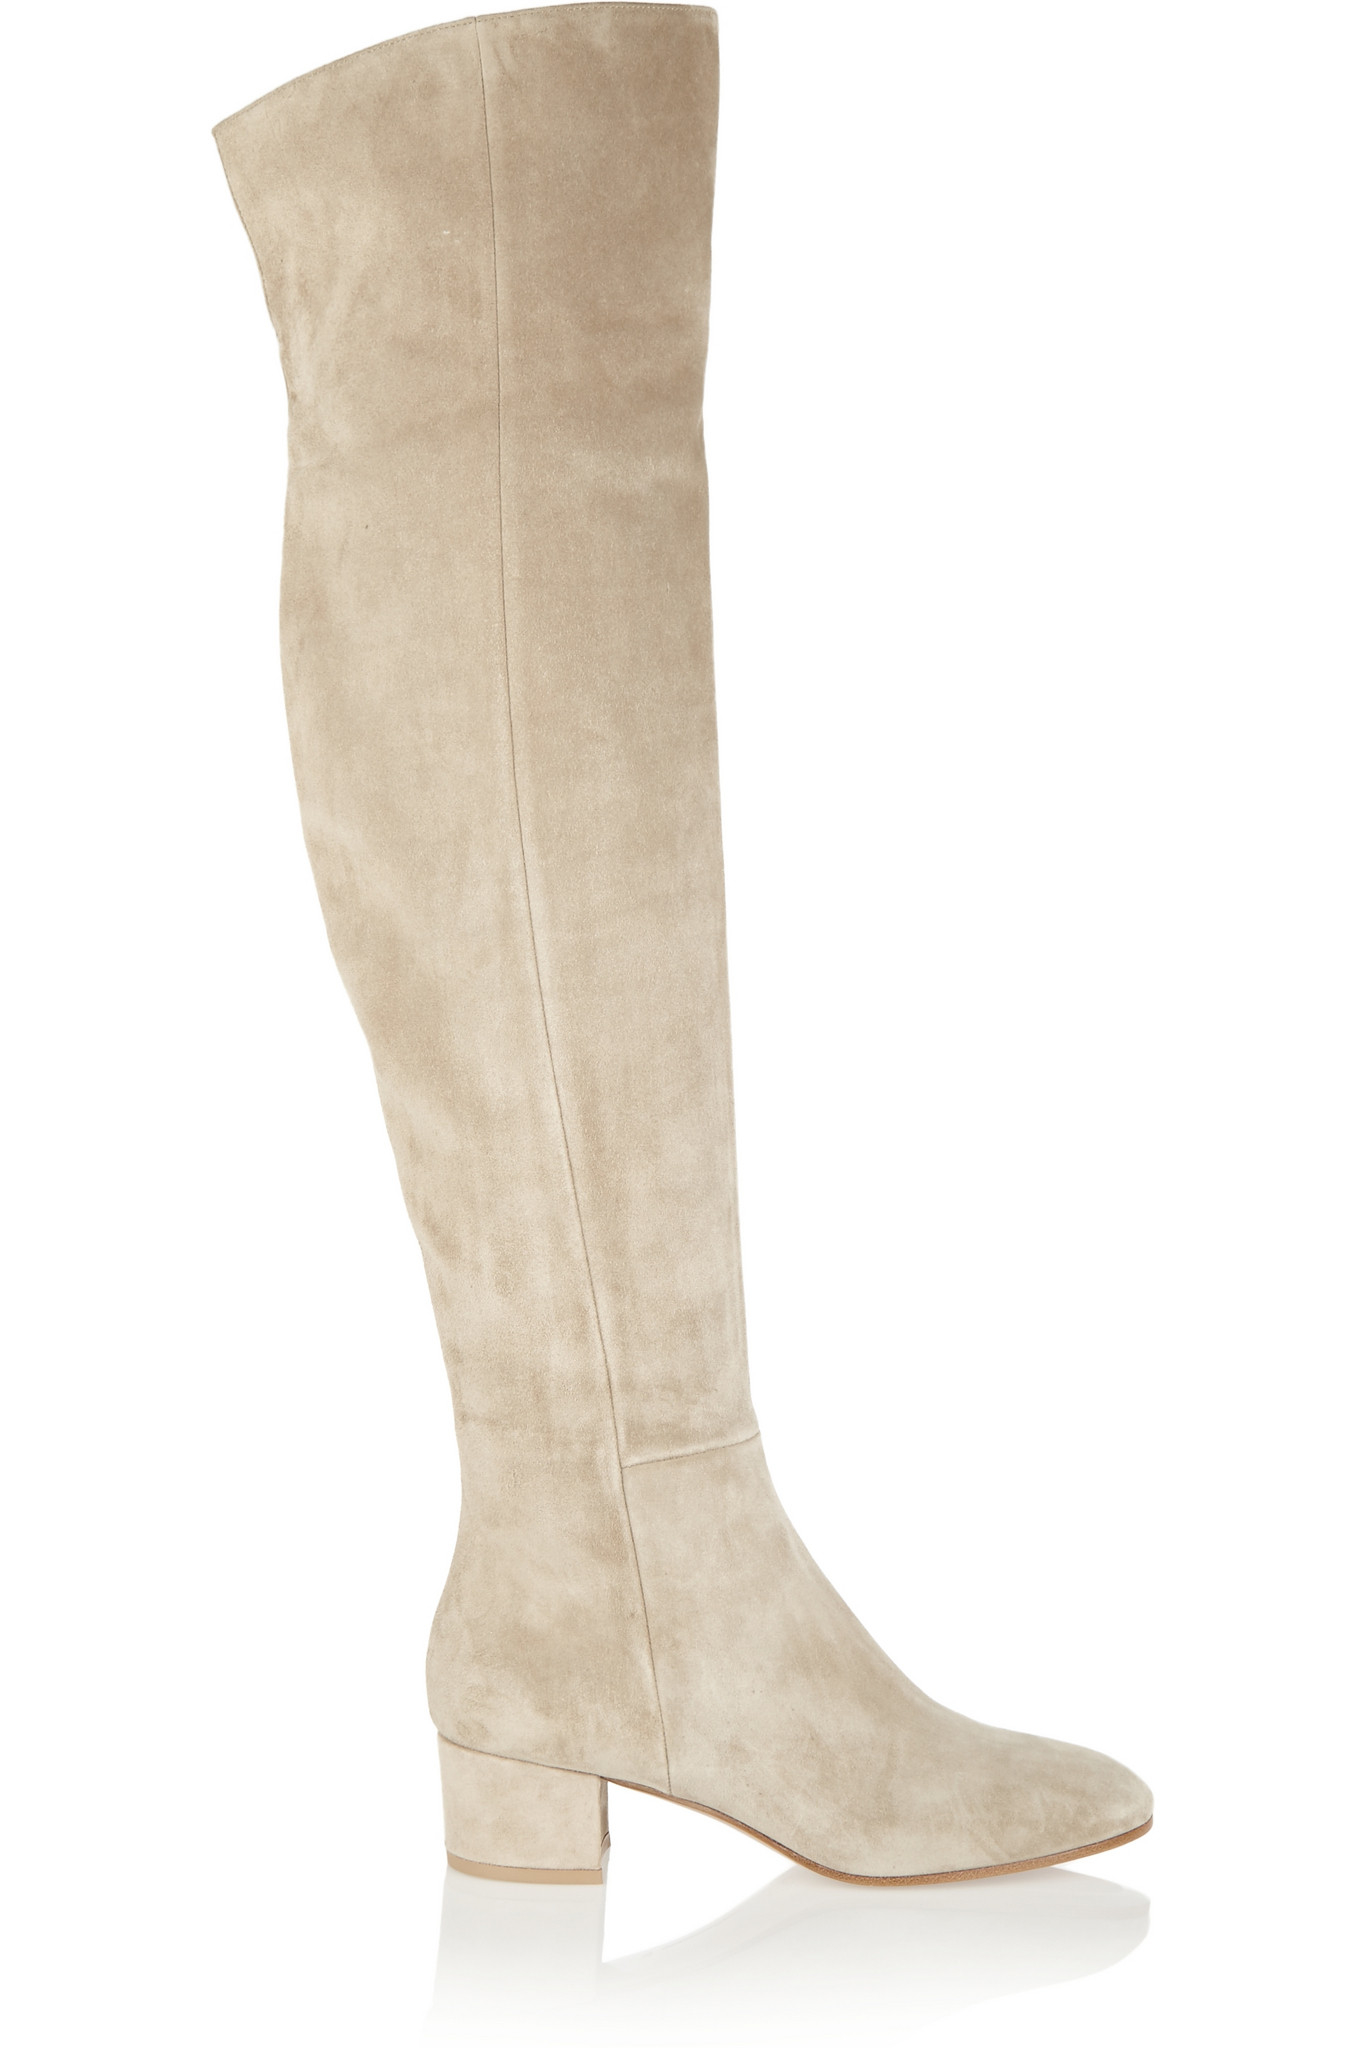 cream suede knee high boots